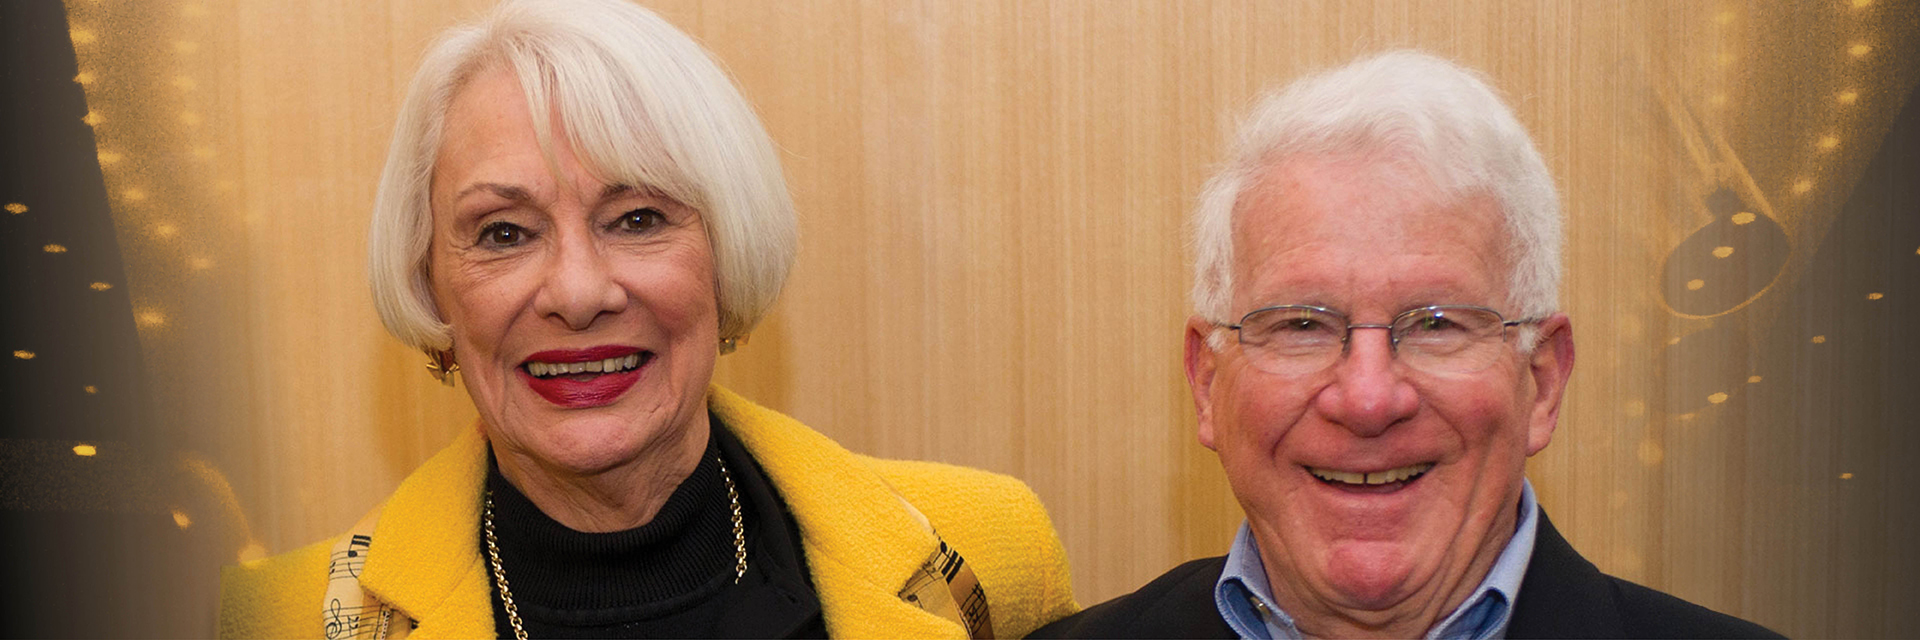 Margaret Guthman, left, and Richard Guthman, right, smiling.